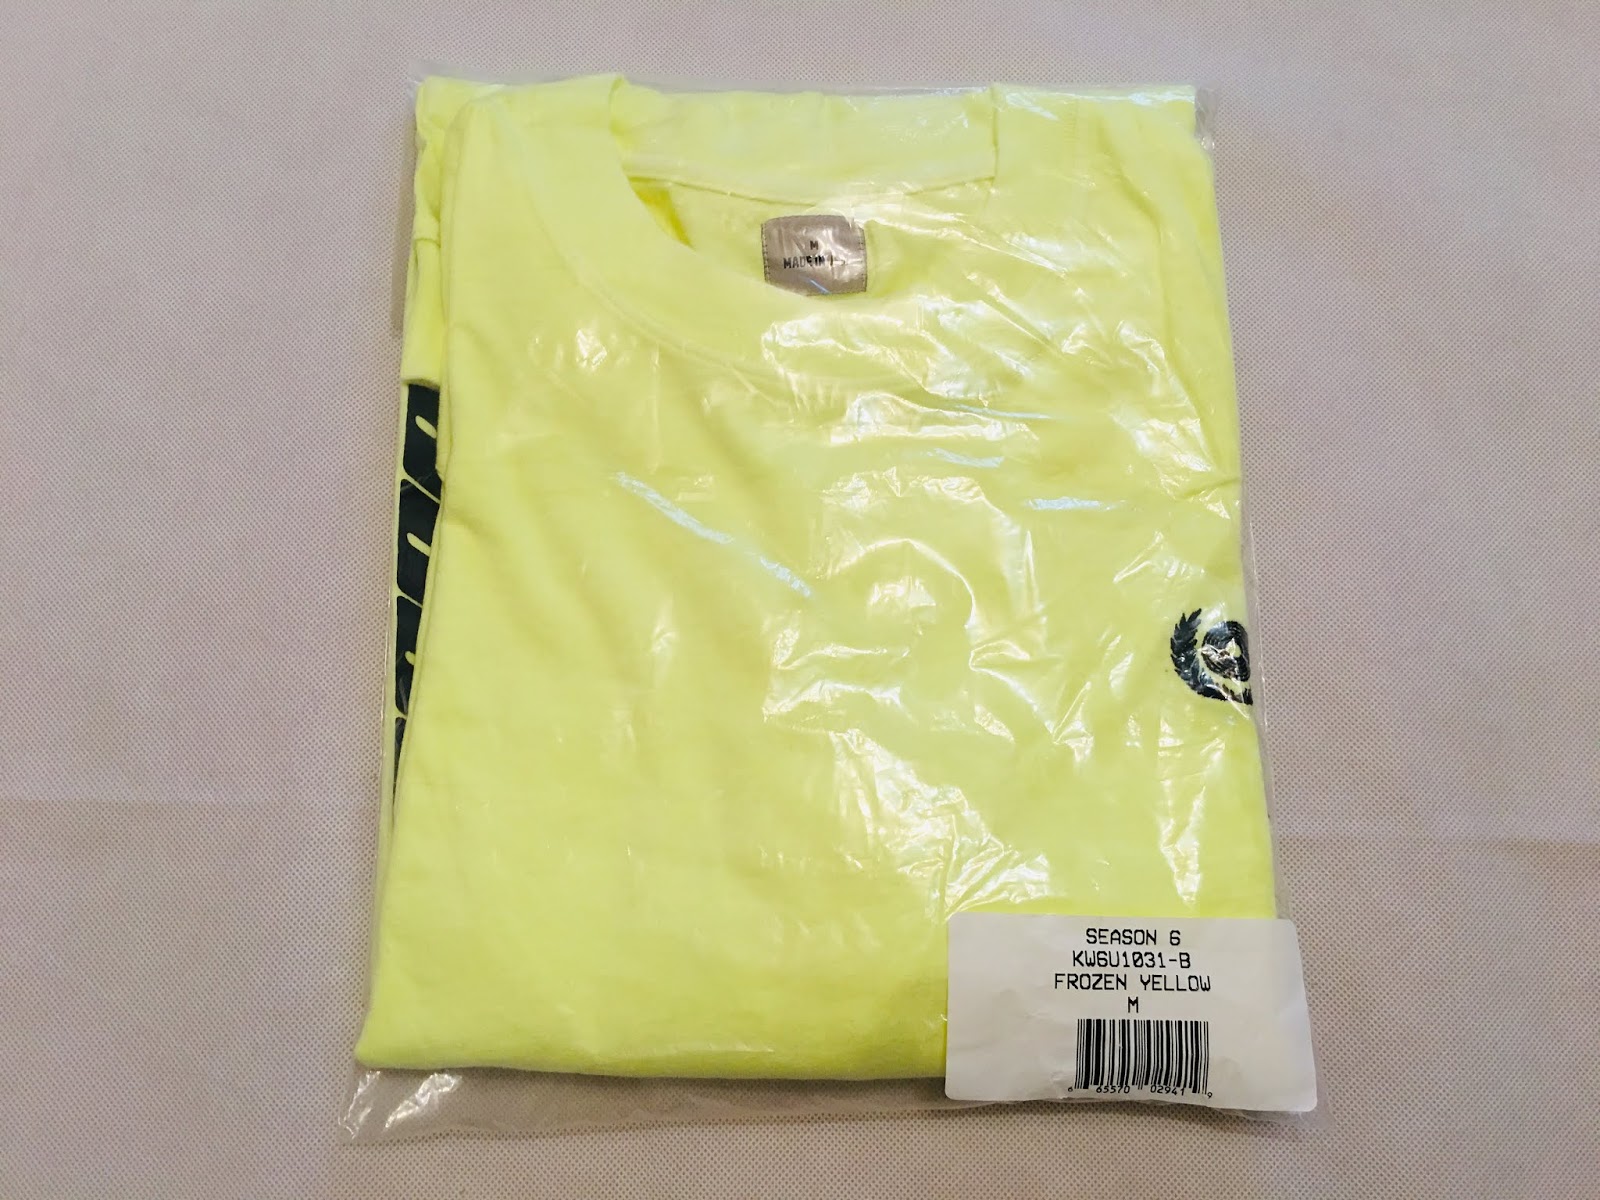 Biggest streetwear, and fashion clothing brands photo video reviews blog: Season Calabasas Frozen Yellow Longsleeve T-shirt Review